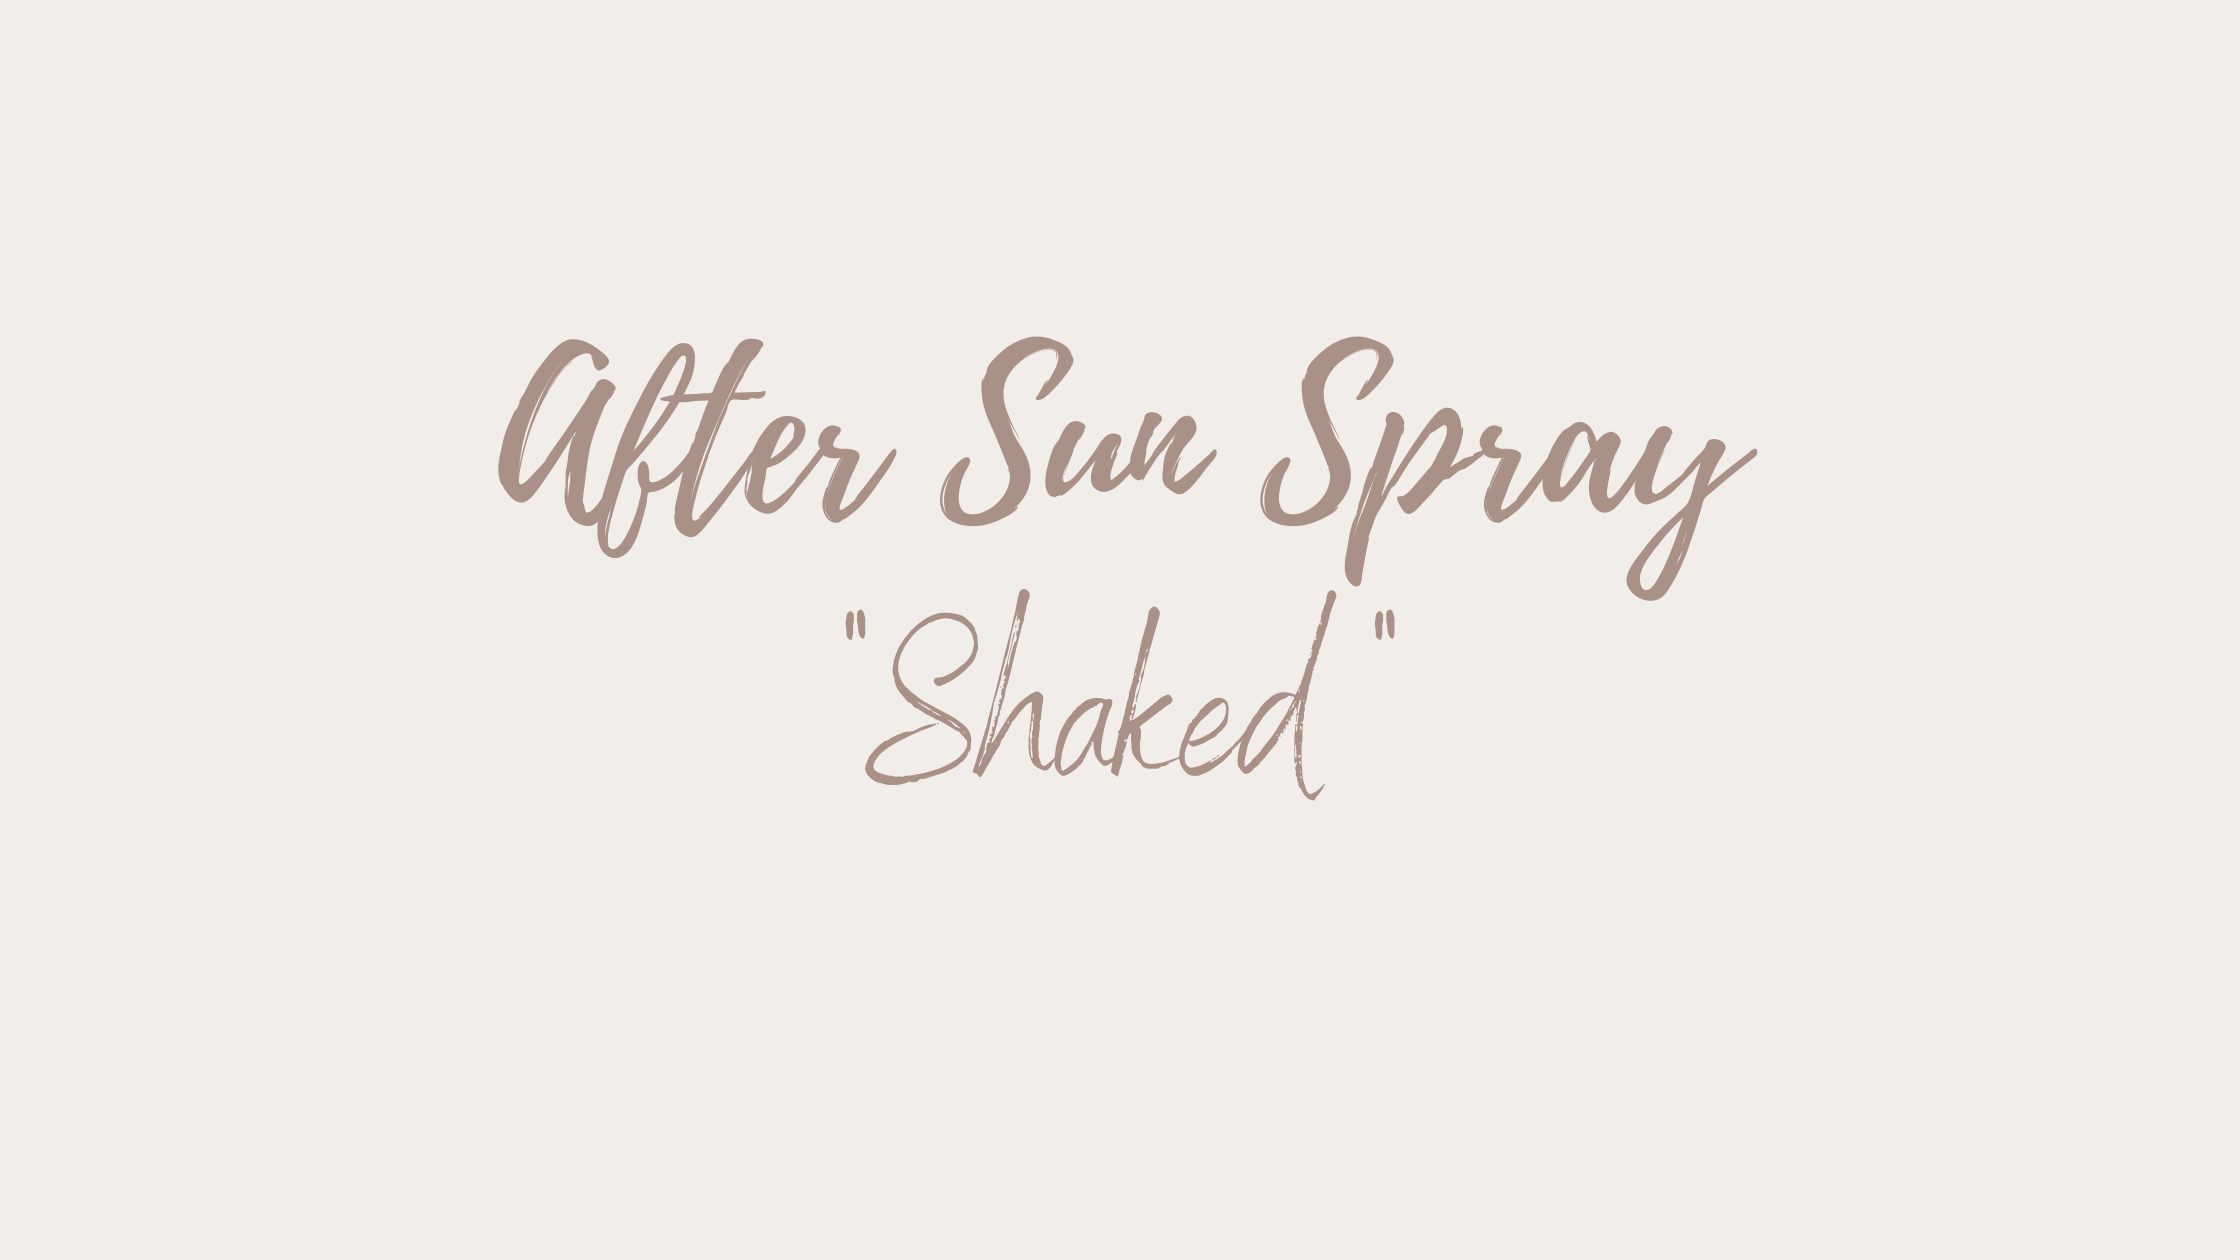 kostenloses-rezept-after-sun-spray-shaked